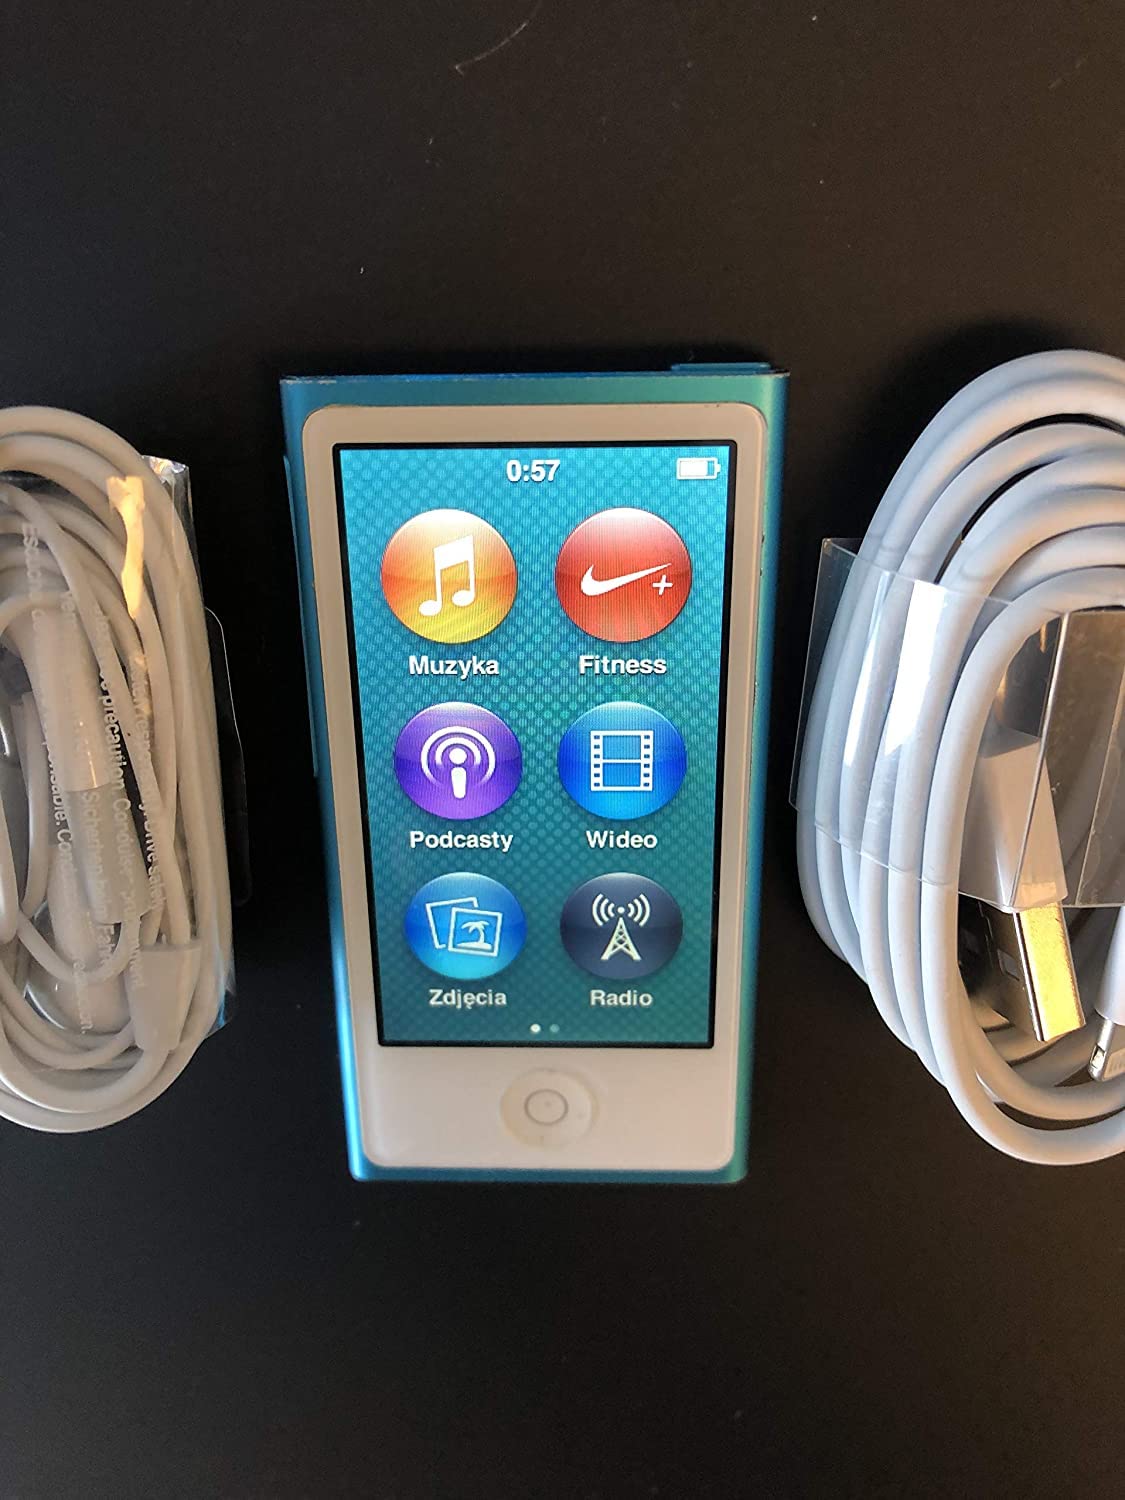 Apple-iPod Nano 16GB Blue 7th Generation Packaged in Plain White Box